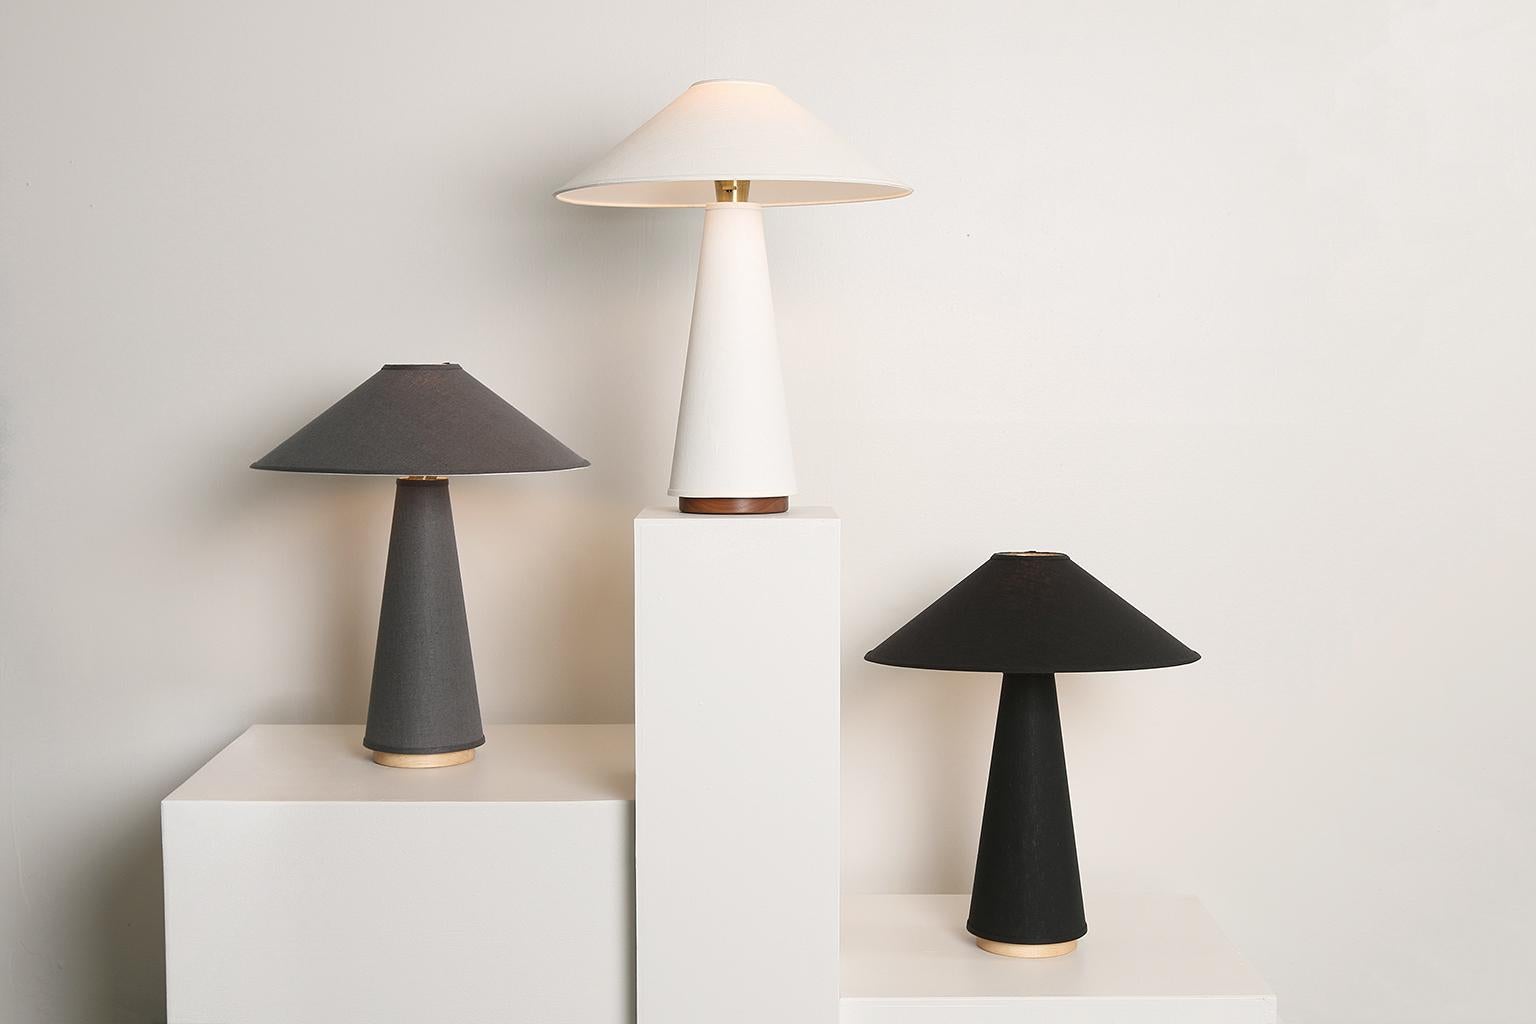 modern black table lamp